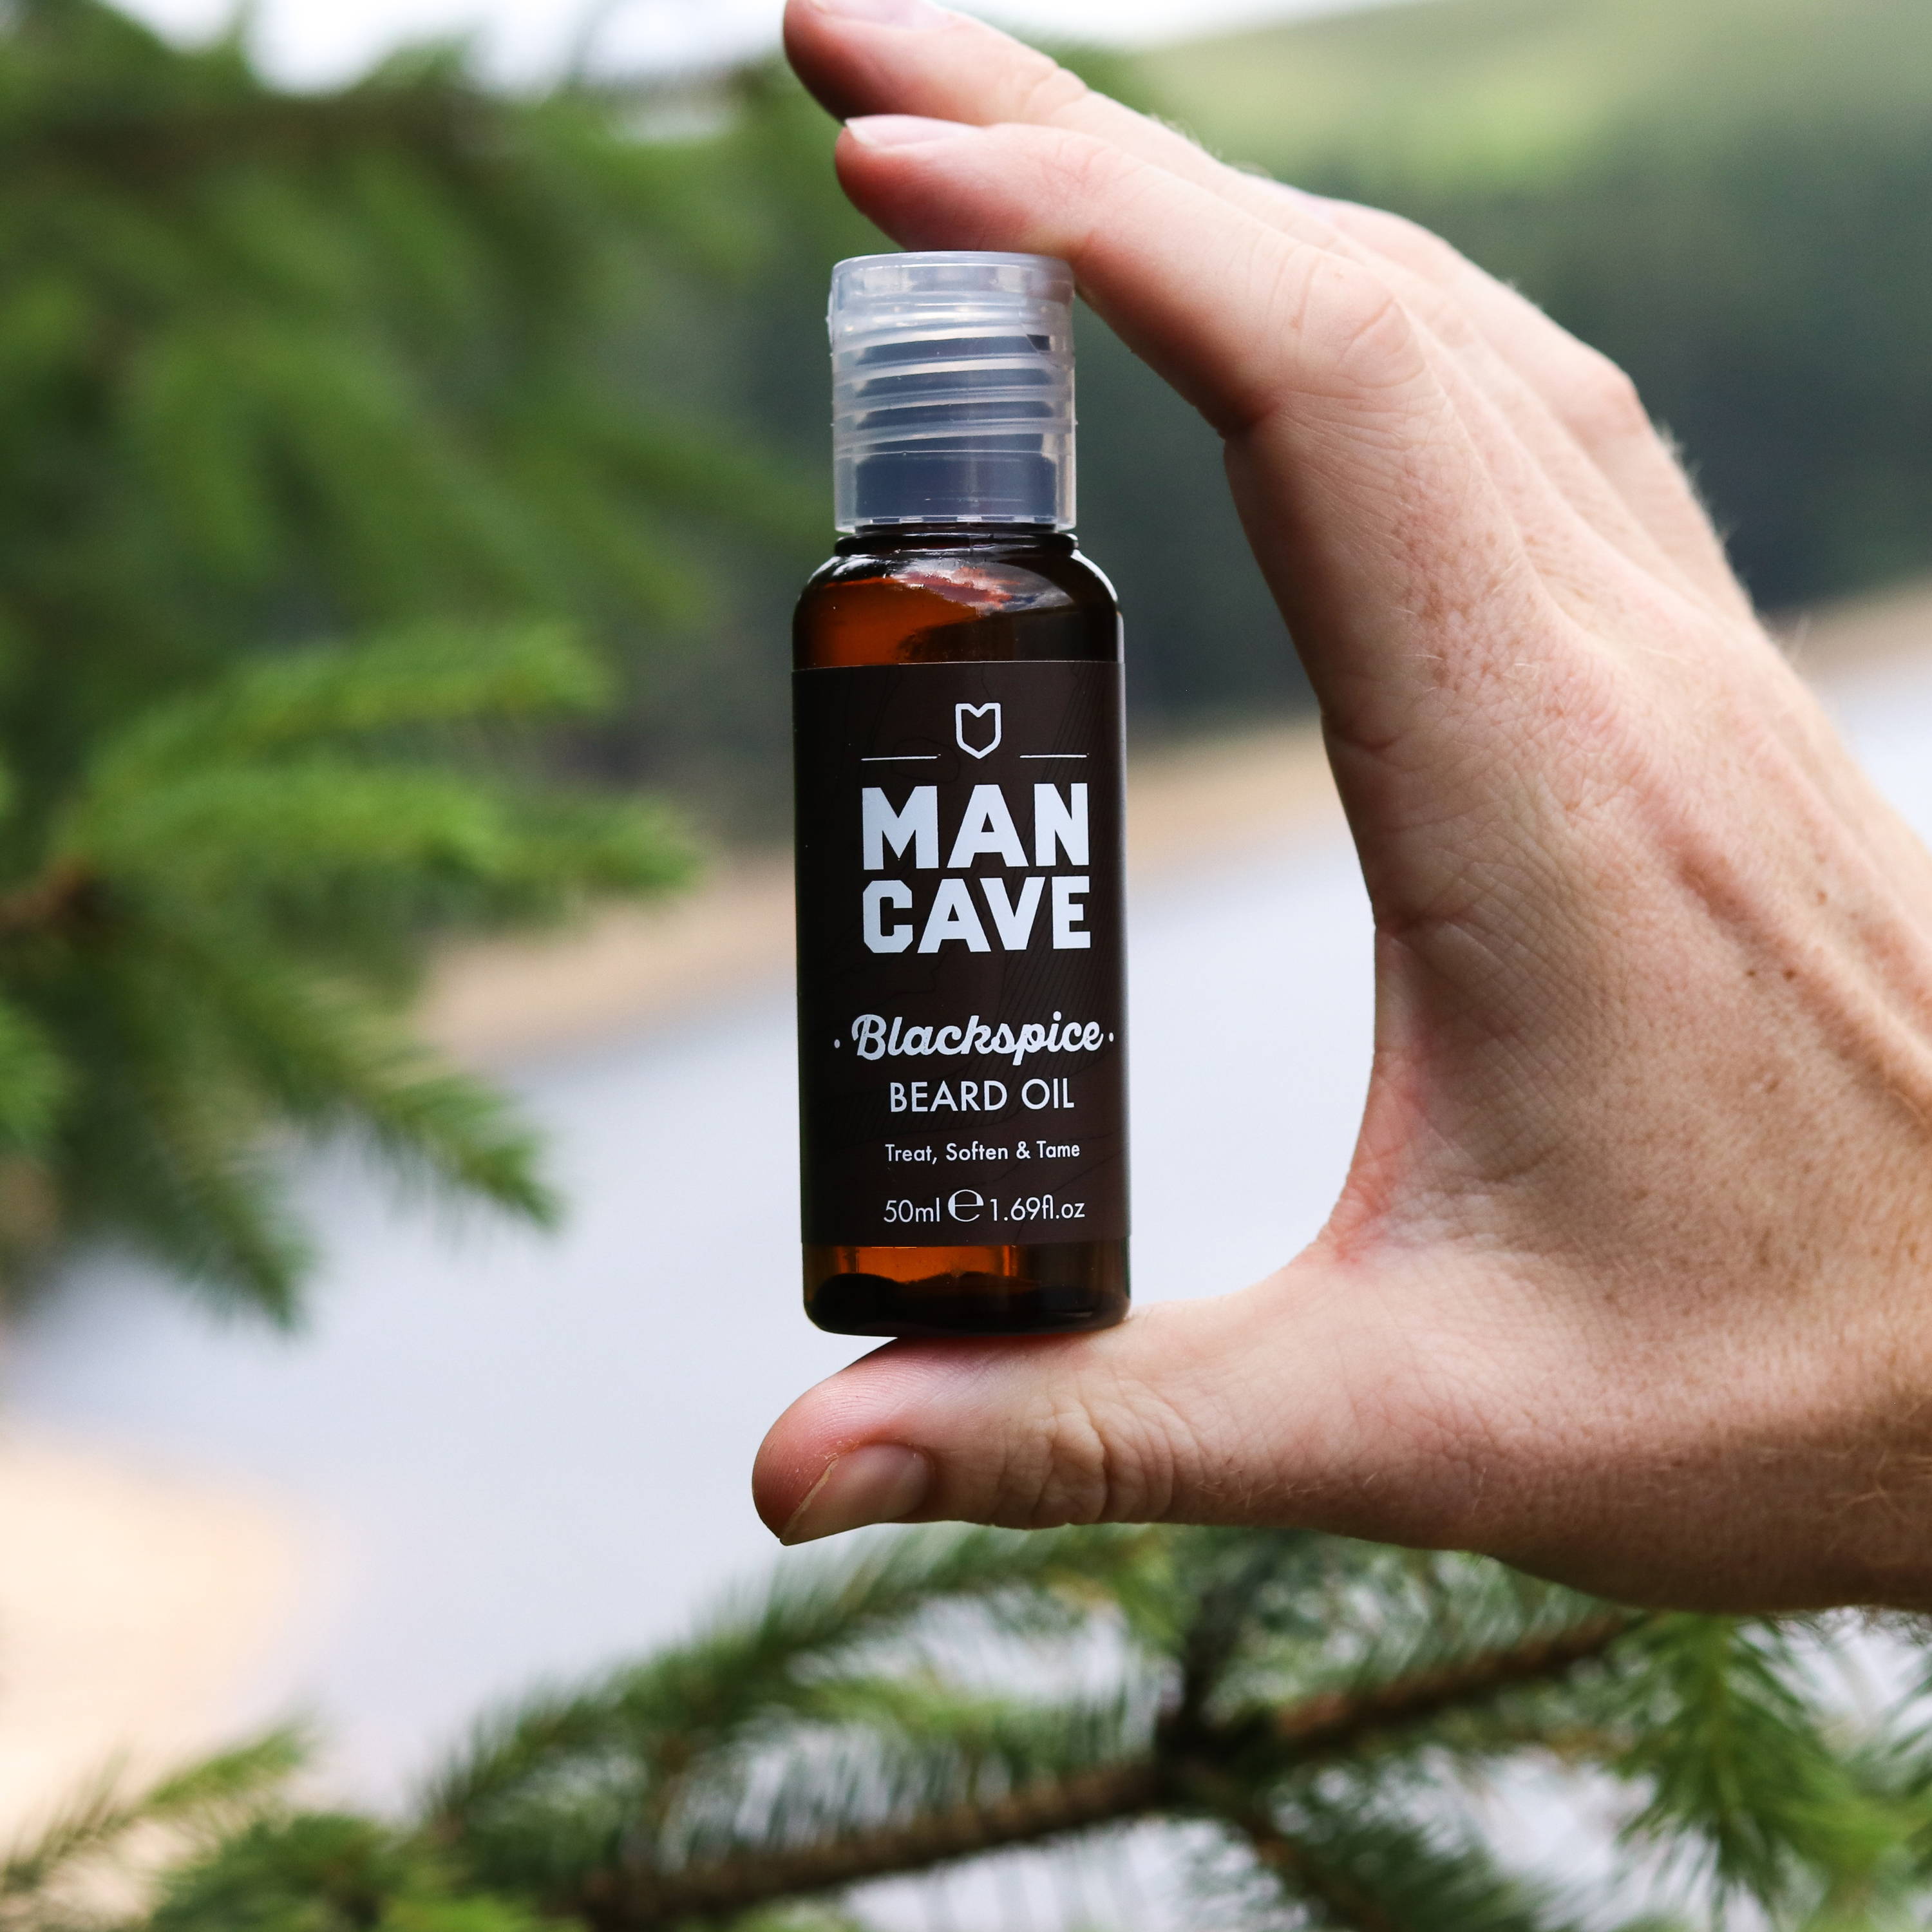 ManCave Blackspice Beard Oil